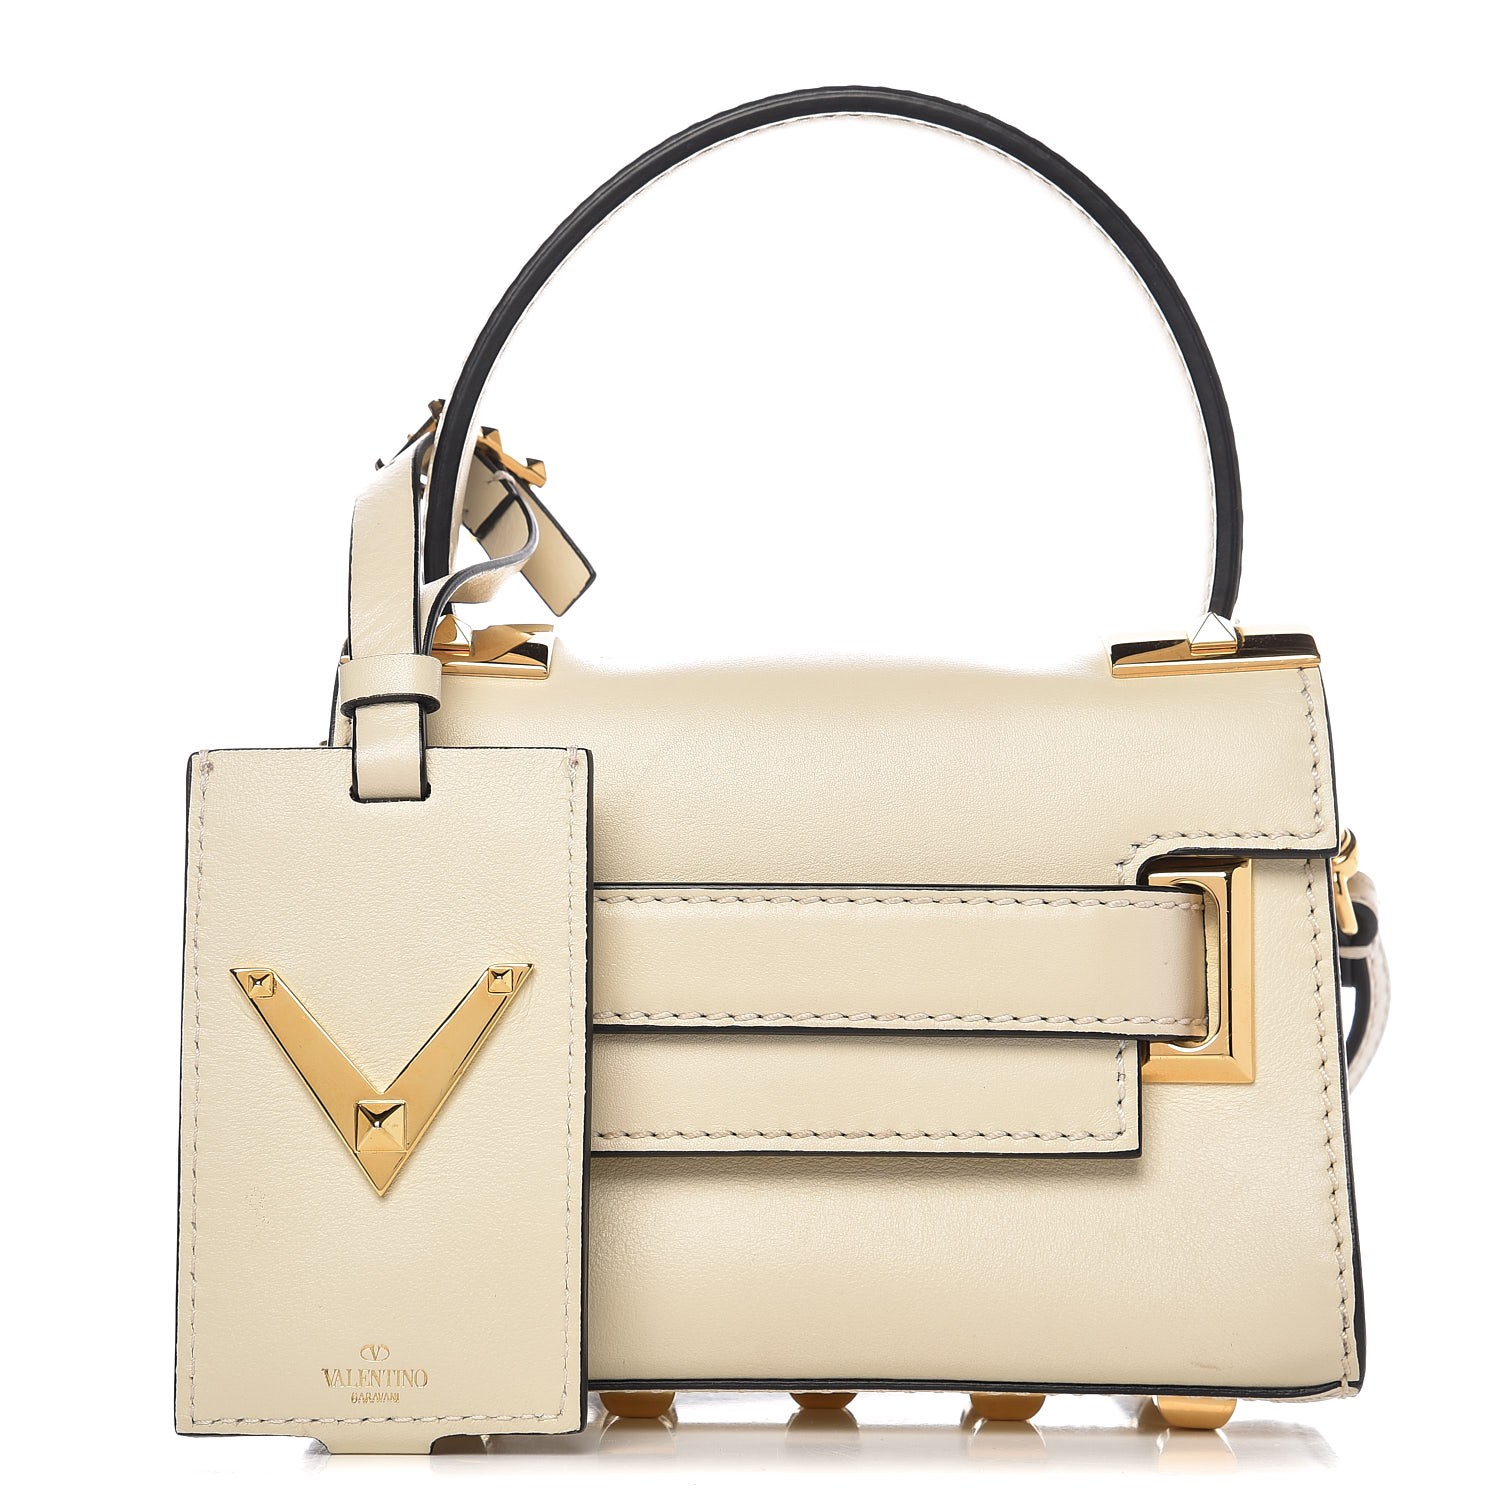 Poggers In My Valentino White Bag : Valentino woman rockstuds shoulder ...